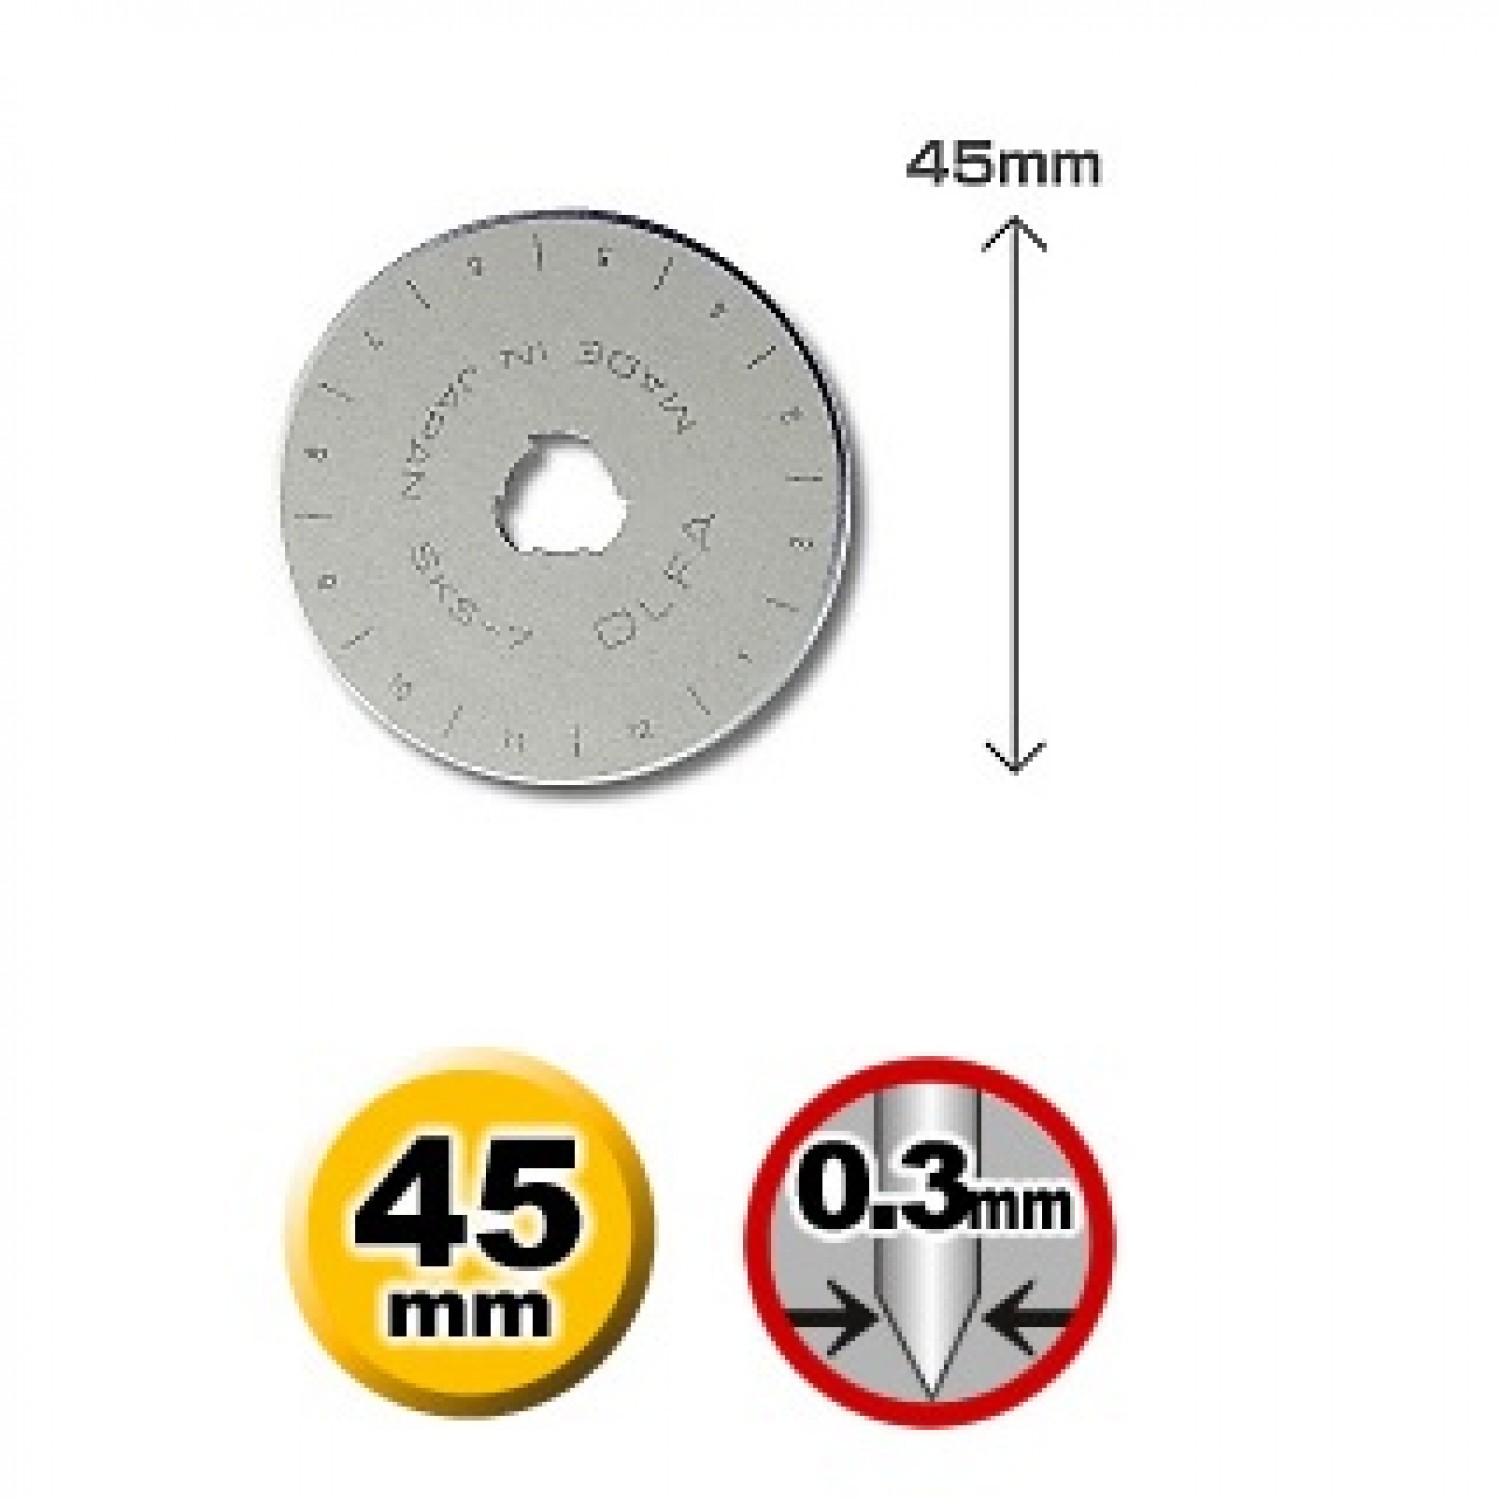 Olfa 45mm Rotary Cutter Replacement Blades x 5 - Tungsten Steel, Razor Edge